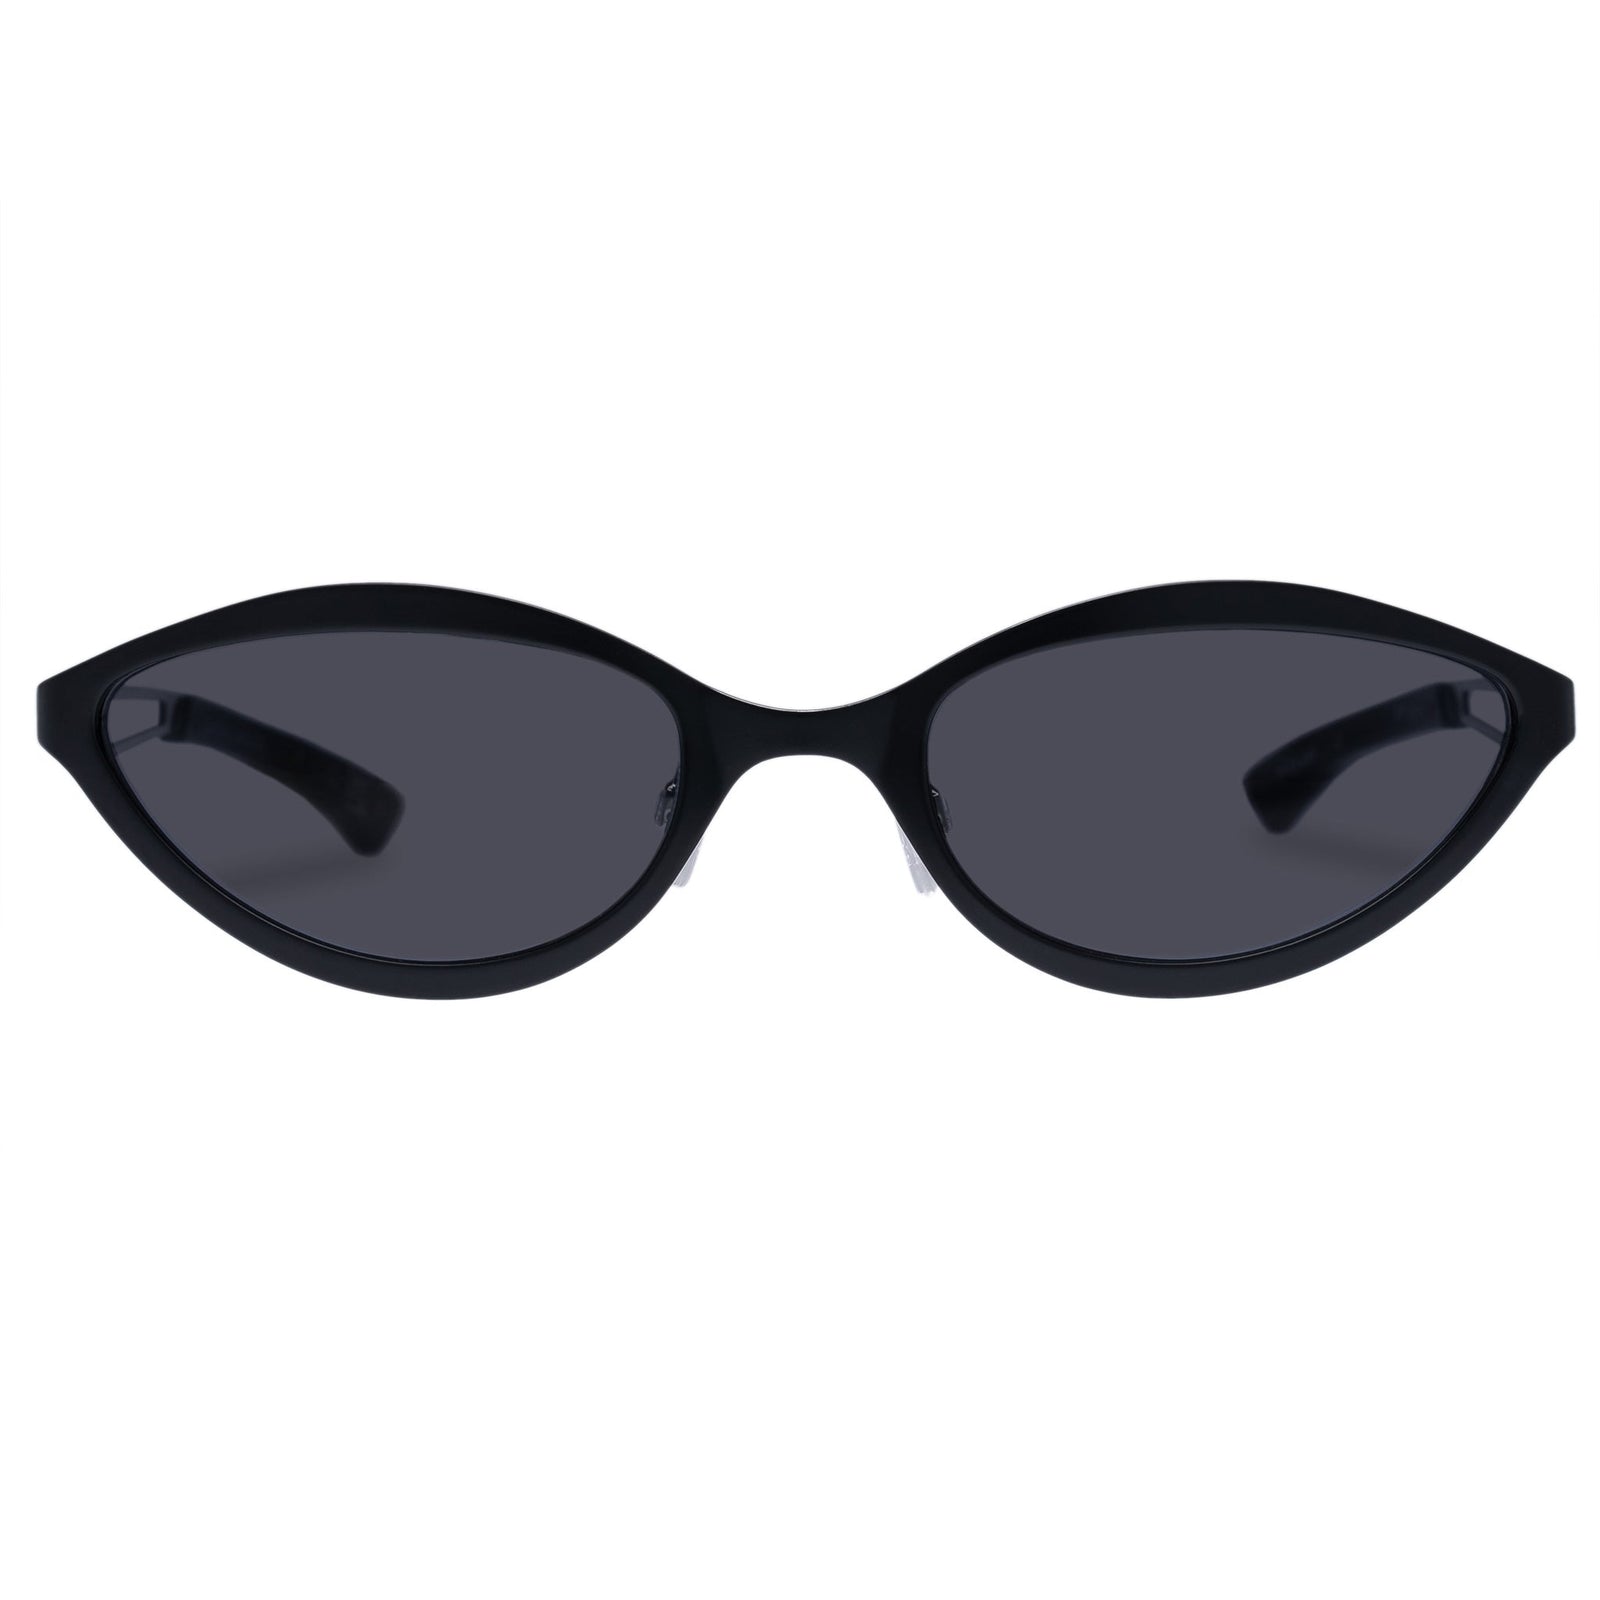 Le Specs - Glitch, Heart Sunglasses, Black, Large